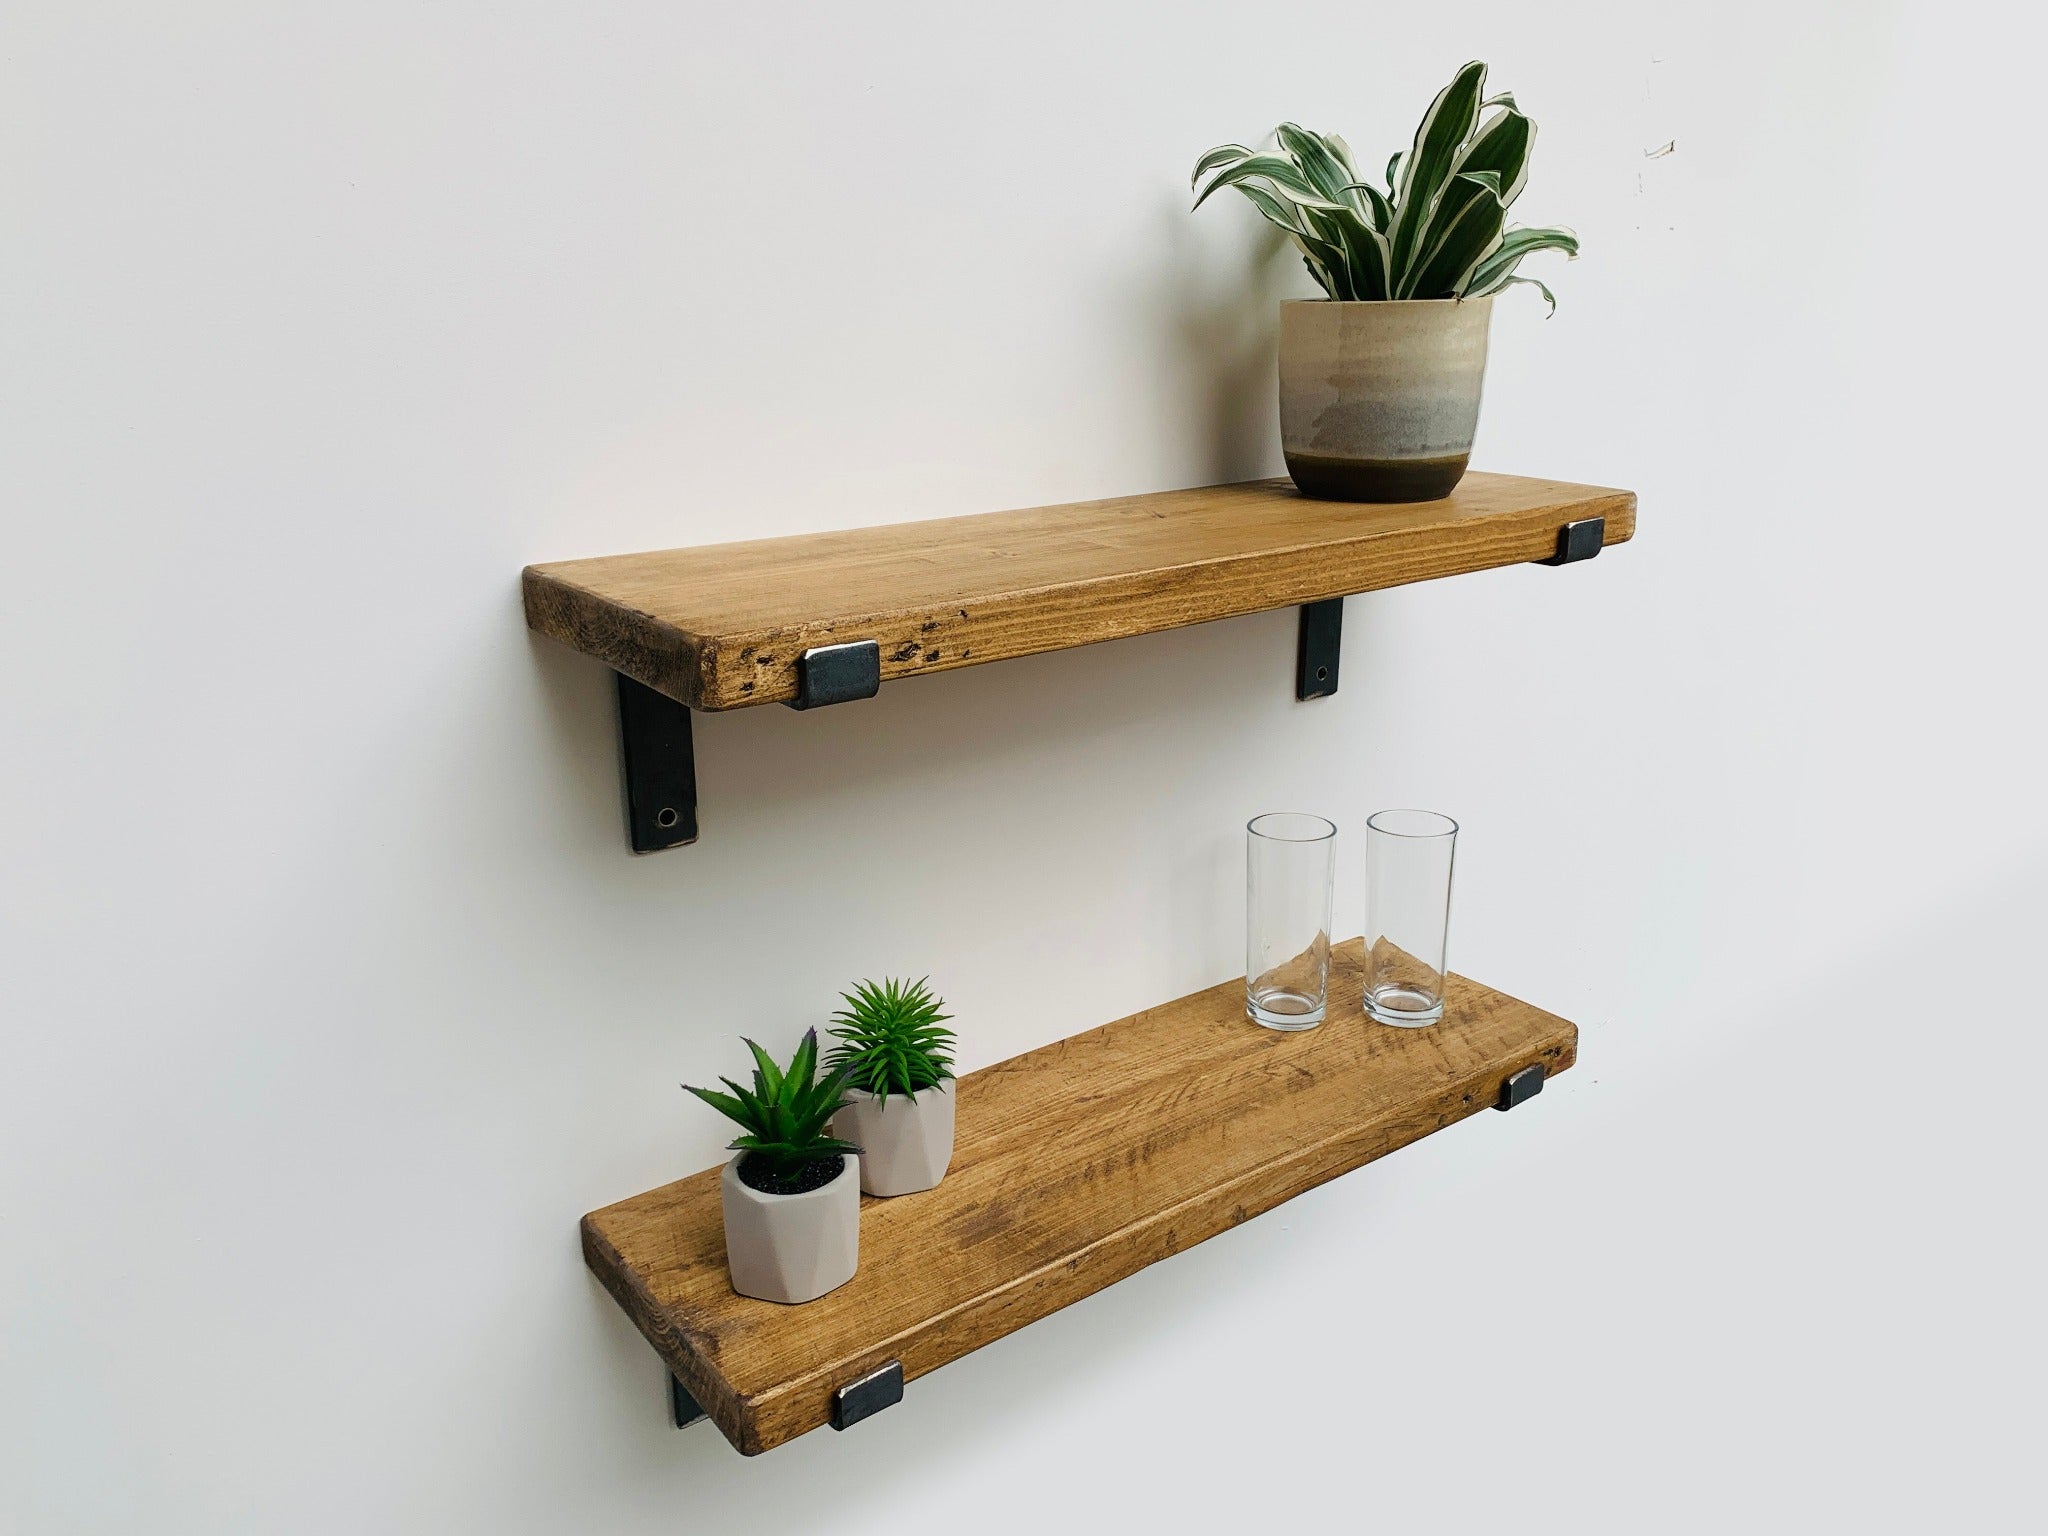 Rustic Reclaimed Wood Kitchen Shelf with Industrial S-Bend Metal Brackets